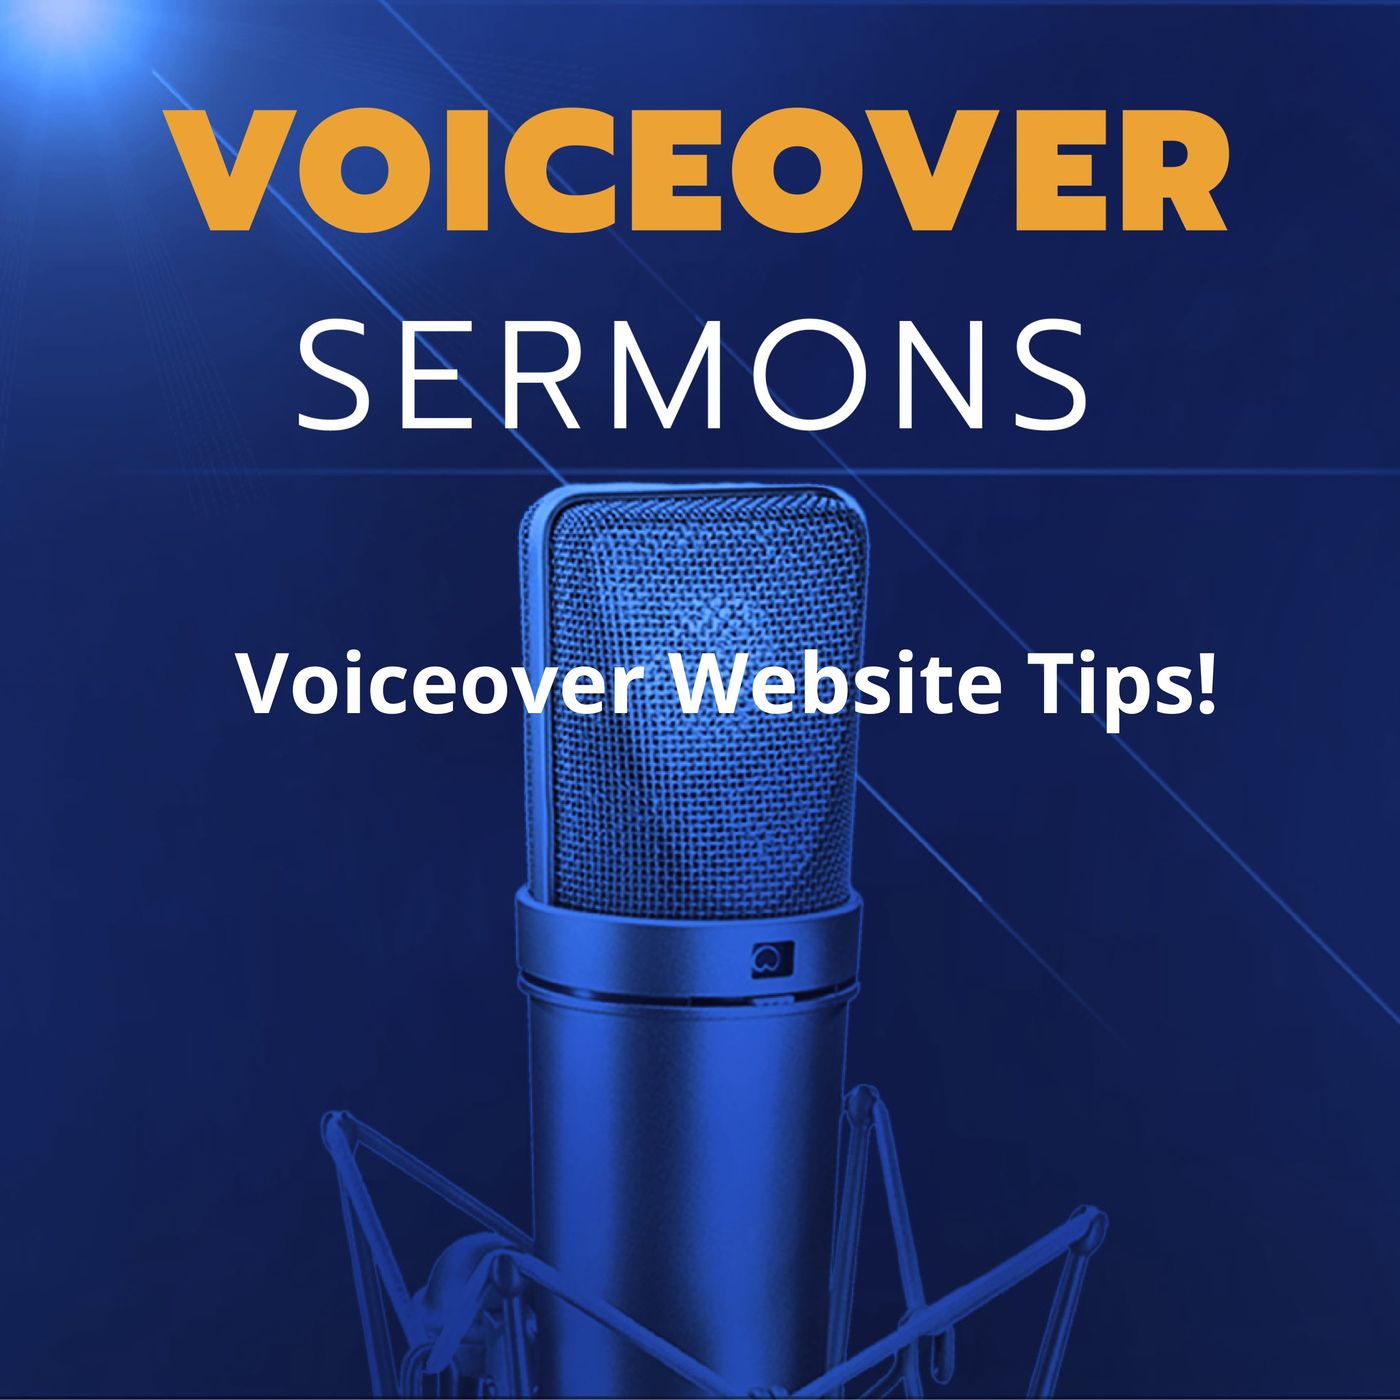 Voiceover Website Tips